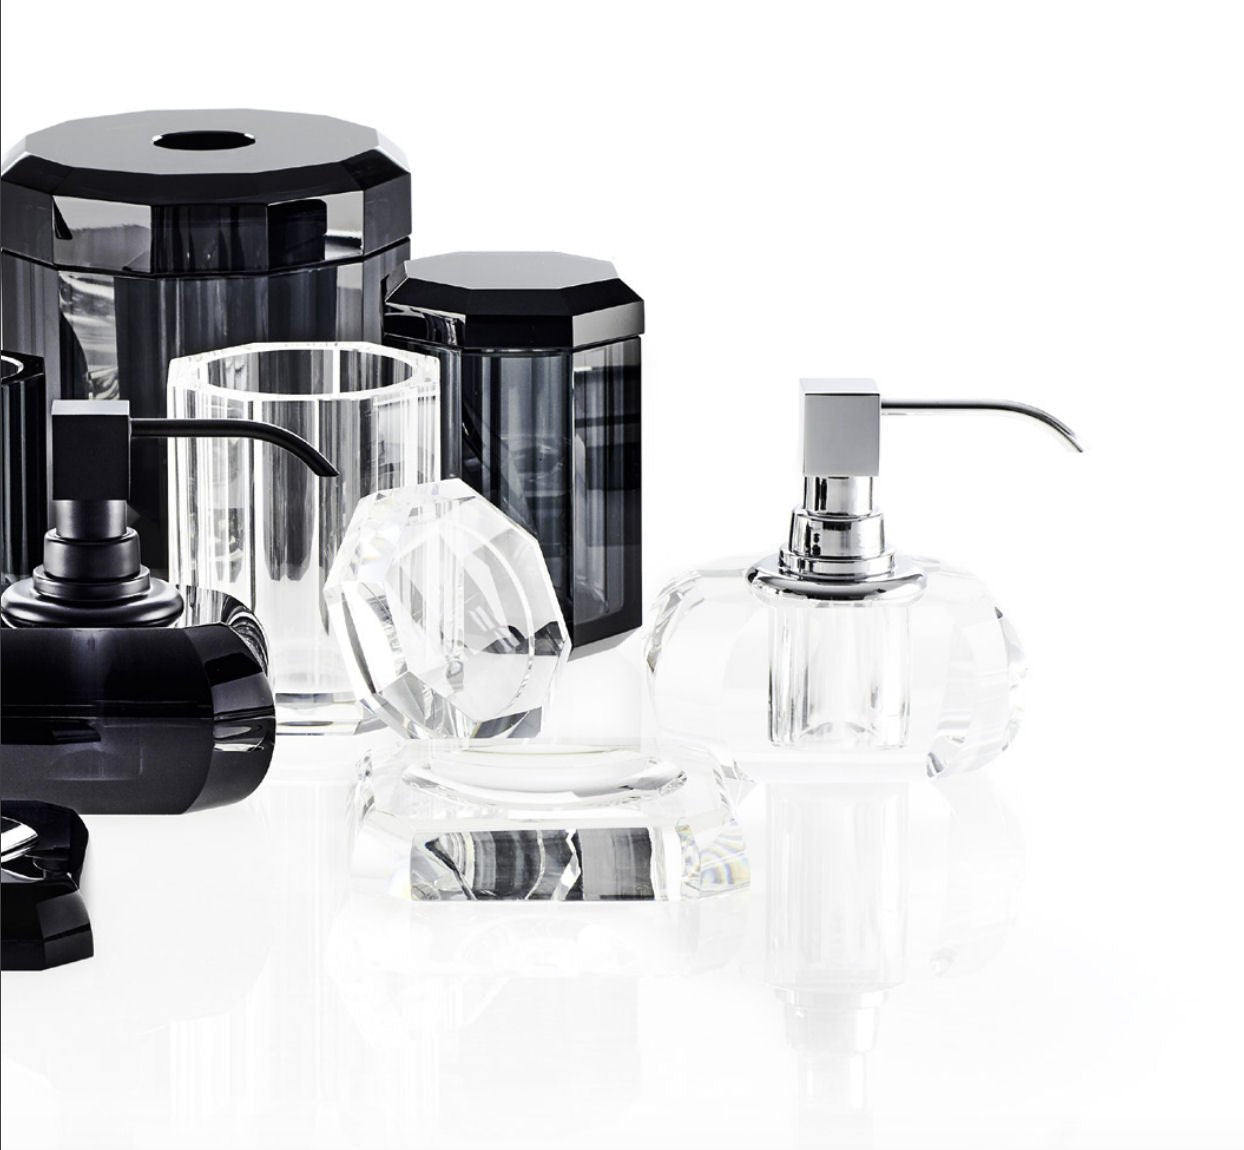 Black Rectangular Crystal Glass Comb Tray by Decor Walther - |VESIMI Design| Luxury Bathrooms & Deco